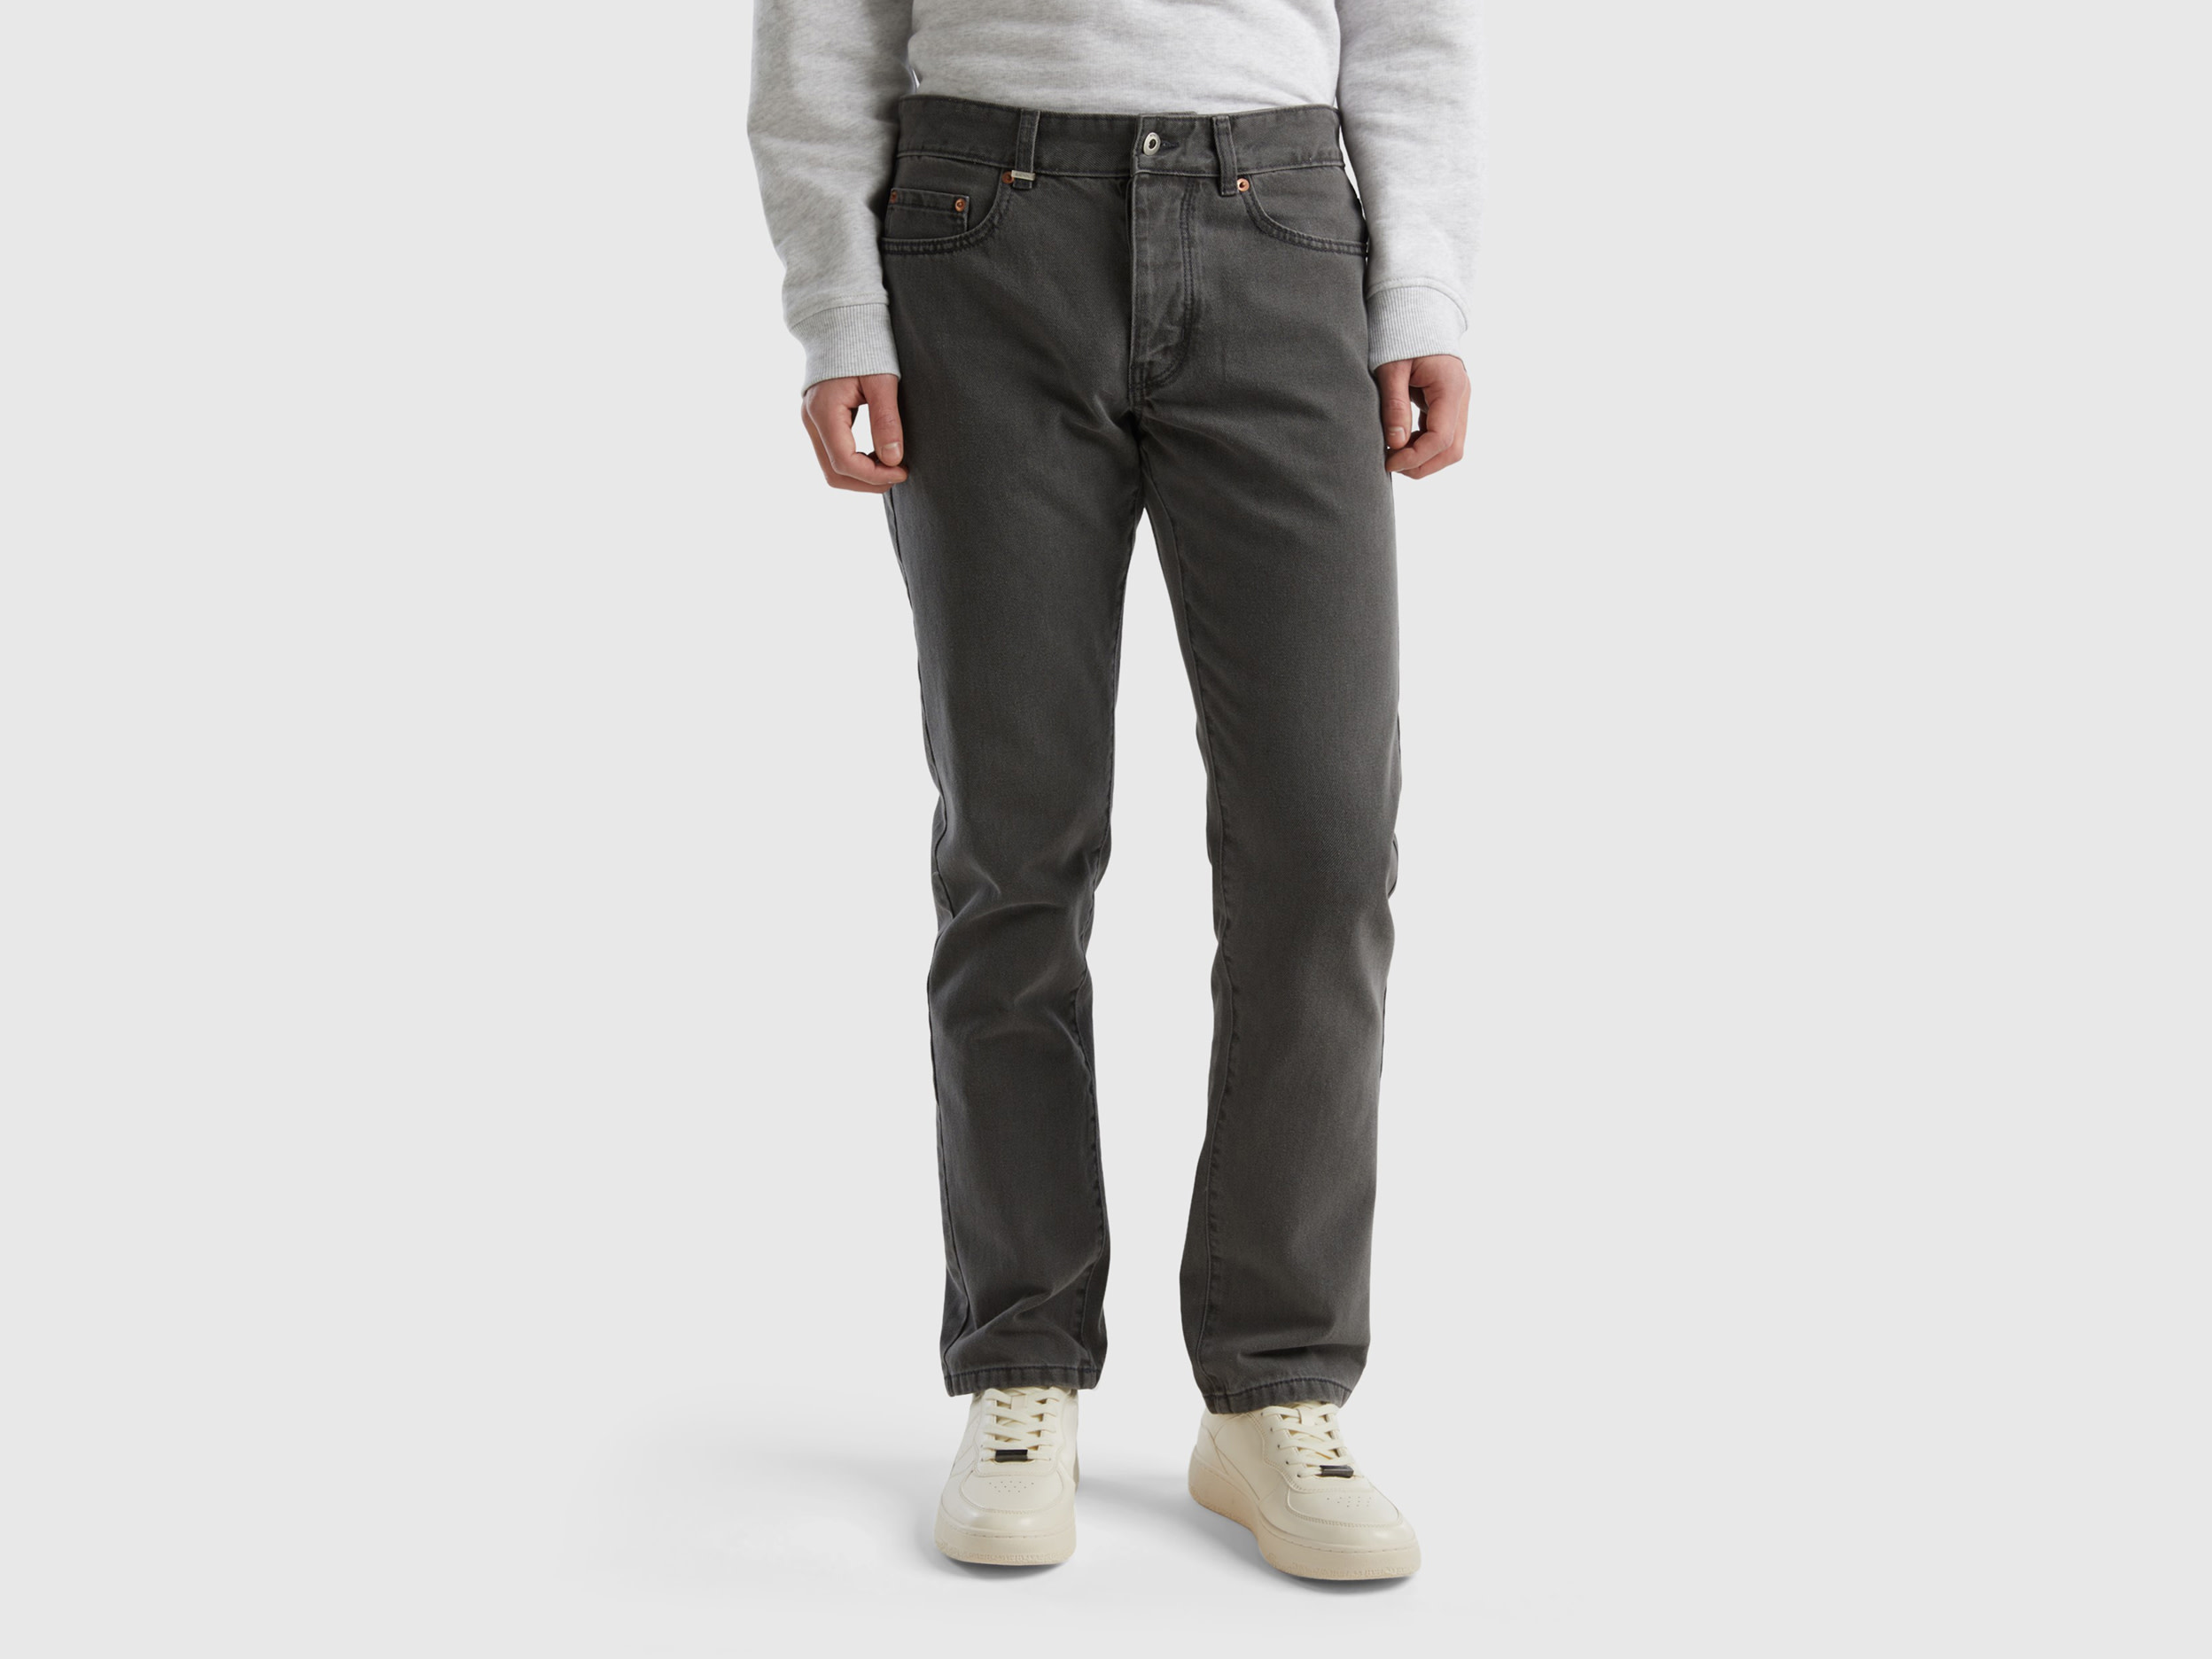 Benetton, Straight Fit Jeans, size 32, Dark Gray, Men